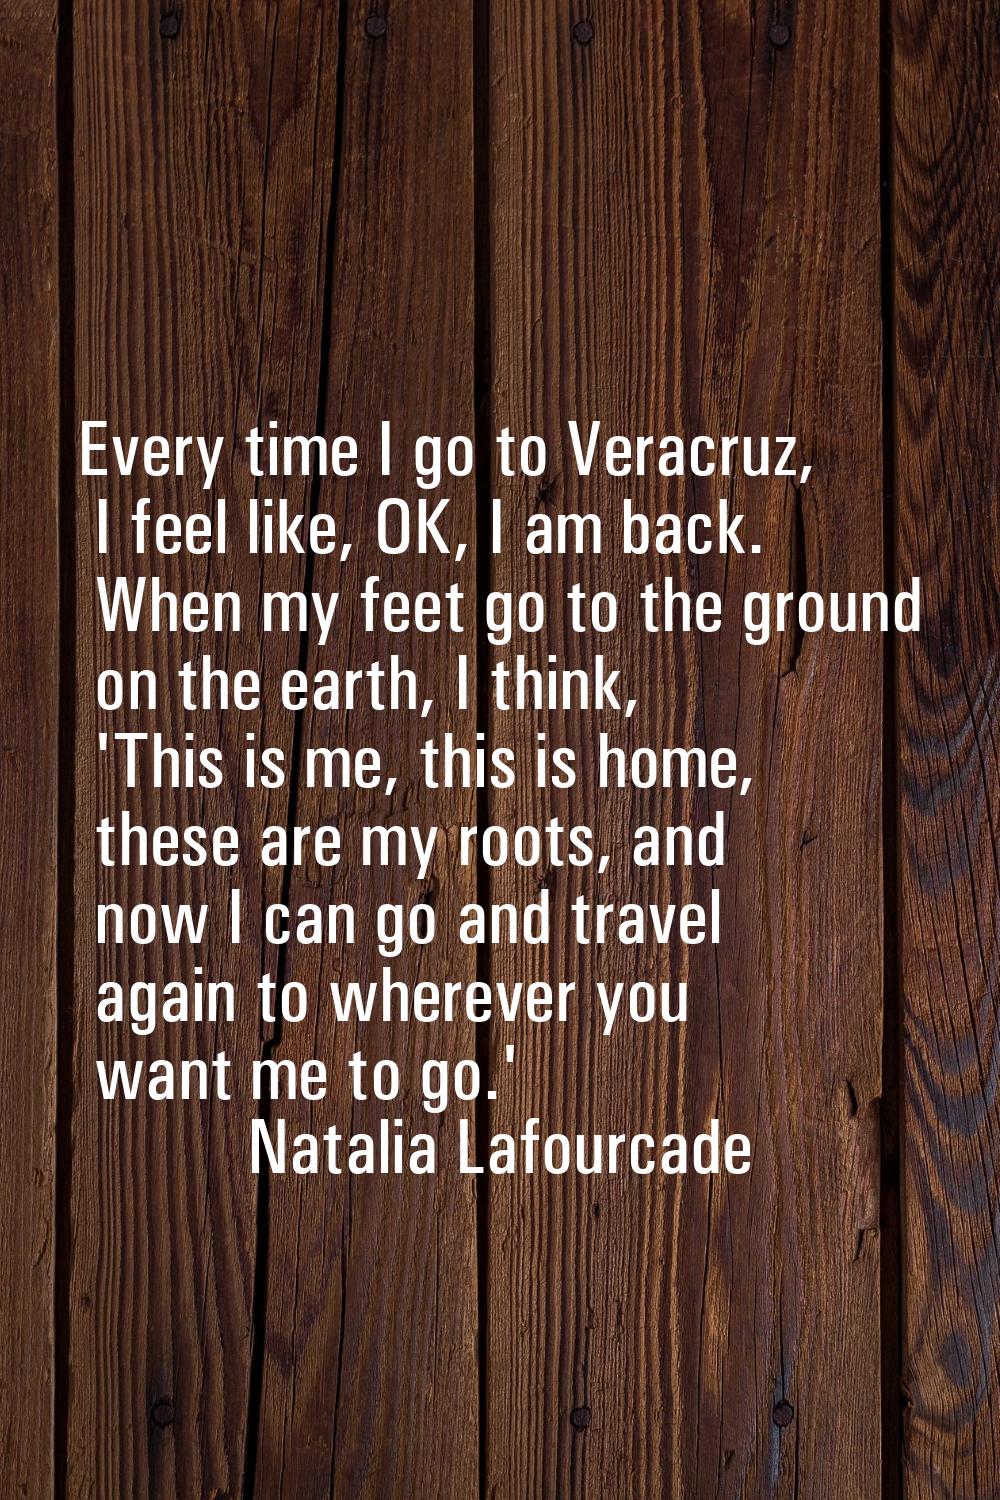 Every time I go to Veracruz, I feel like, OK, I am back. When my feet go to the ground on the earth